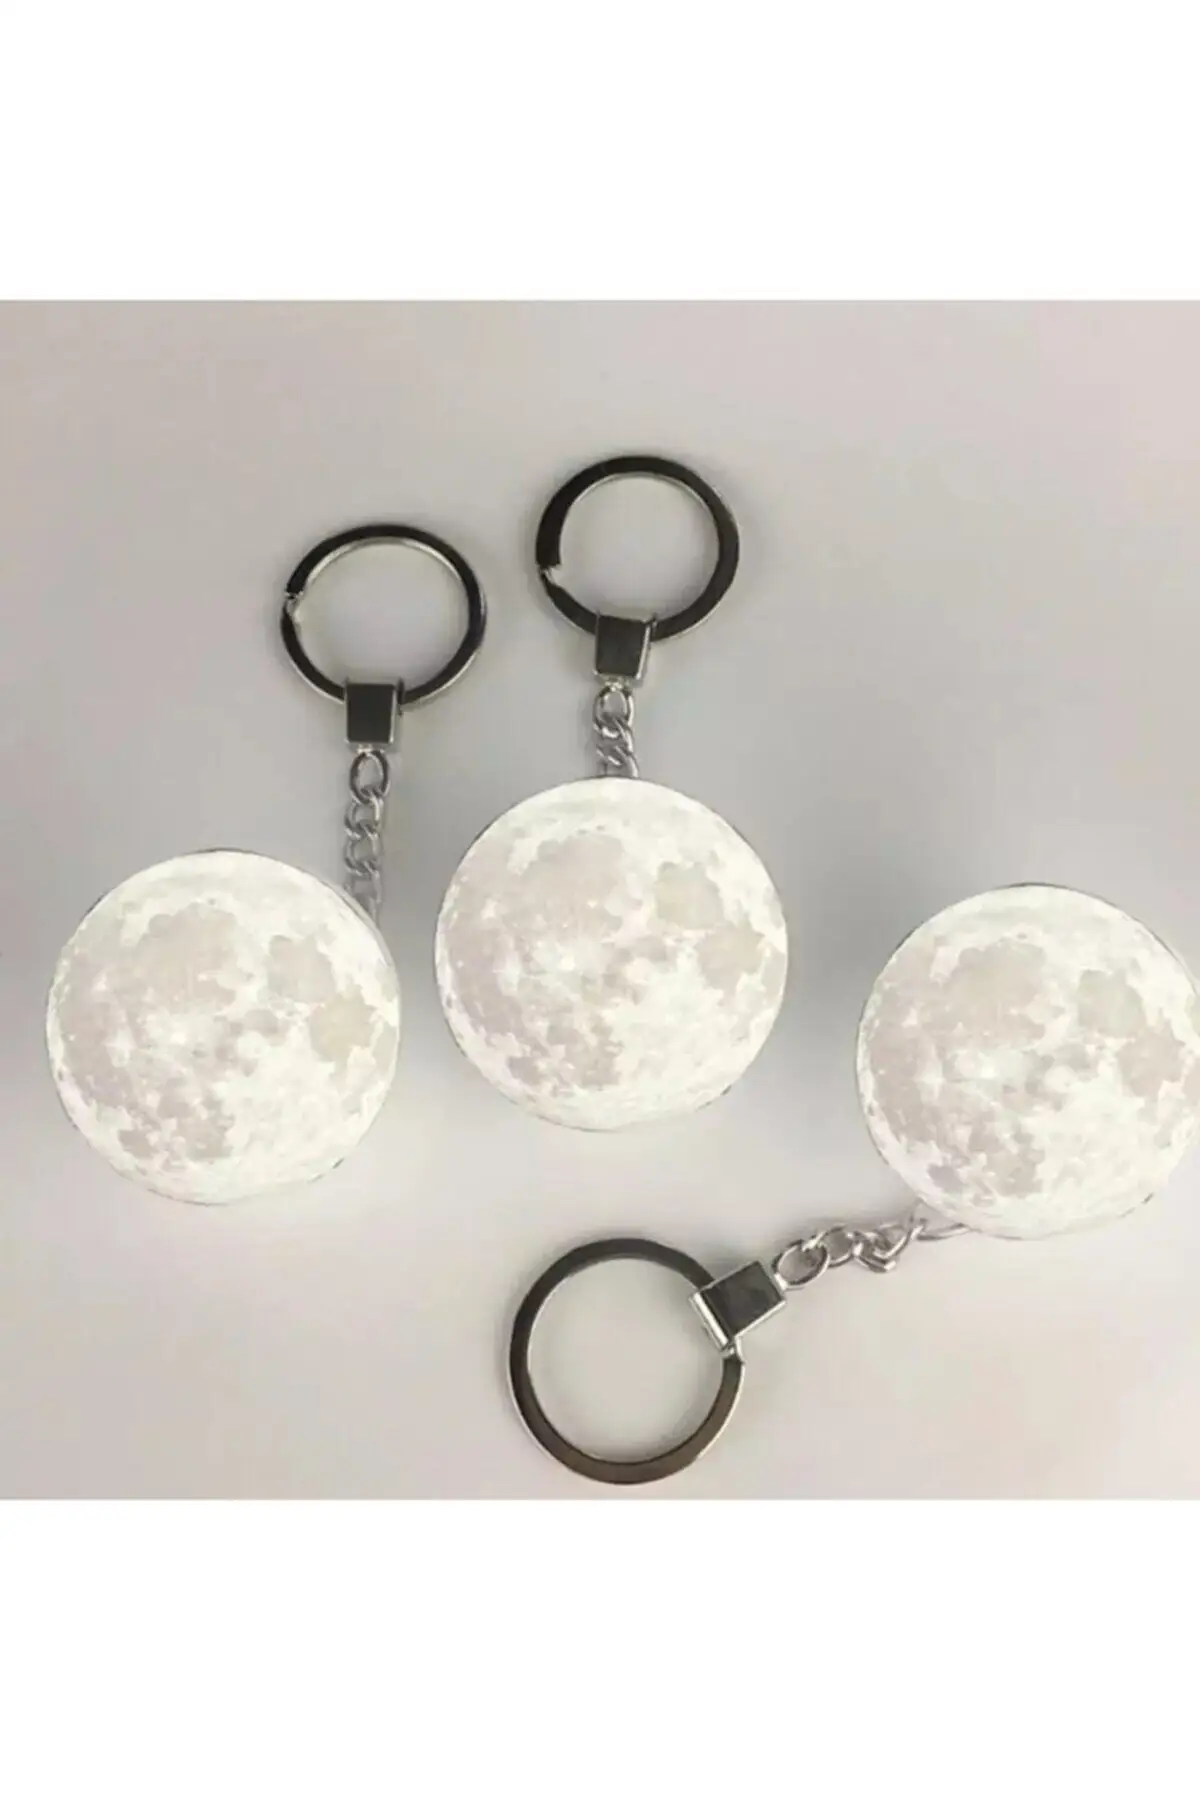 3d Moon Lamp Luminous Moon Keychain Gift Products Light Emitting Mini Bulb Home Car Keychains Fashion Jewelry